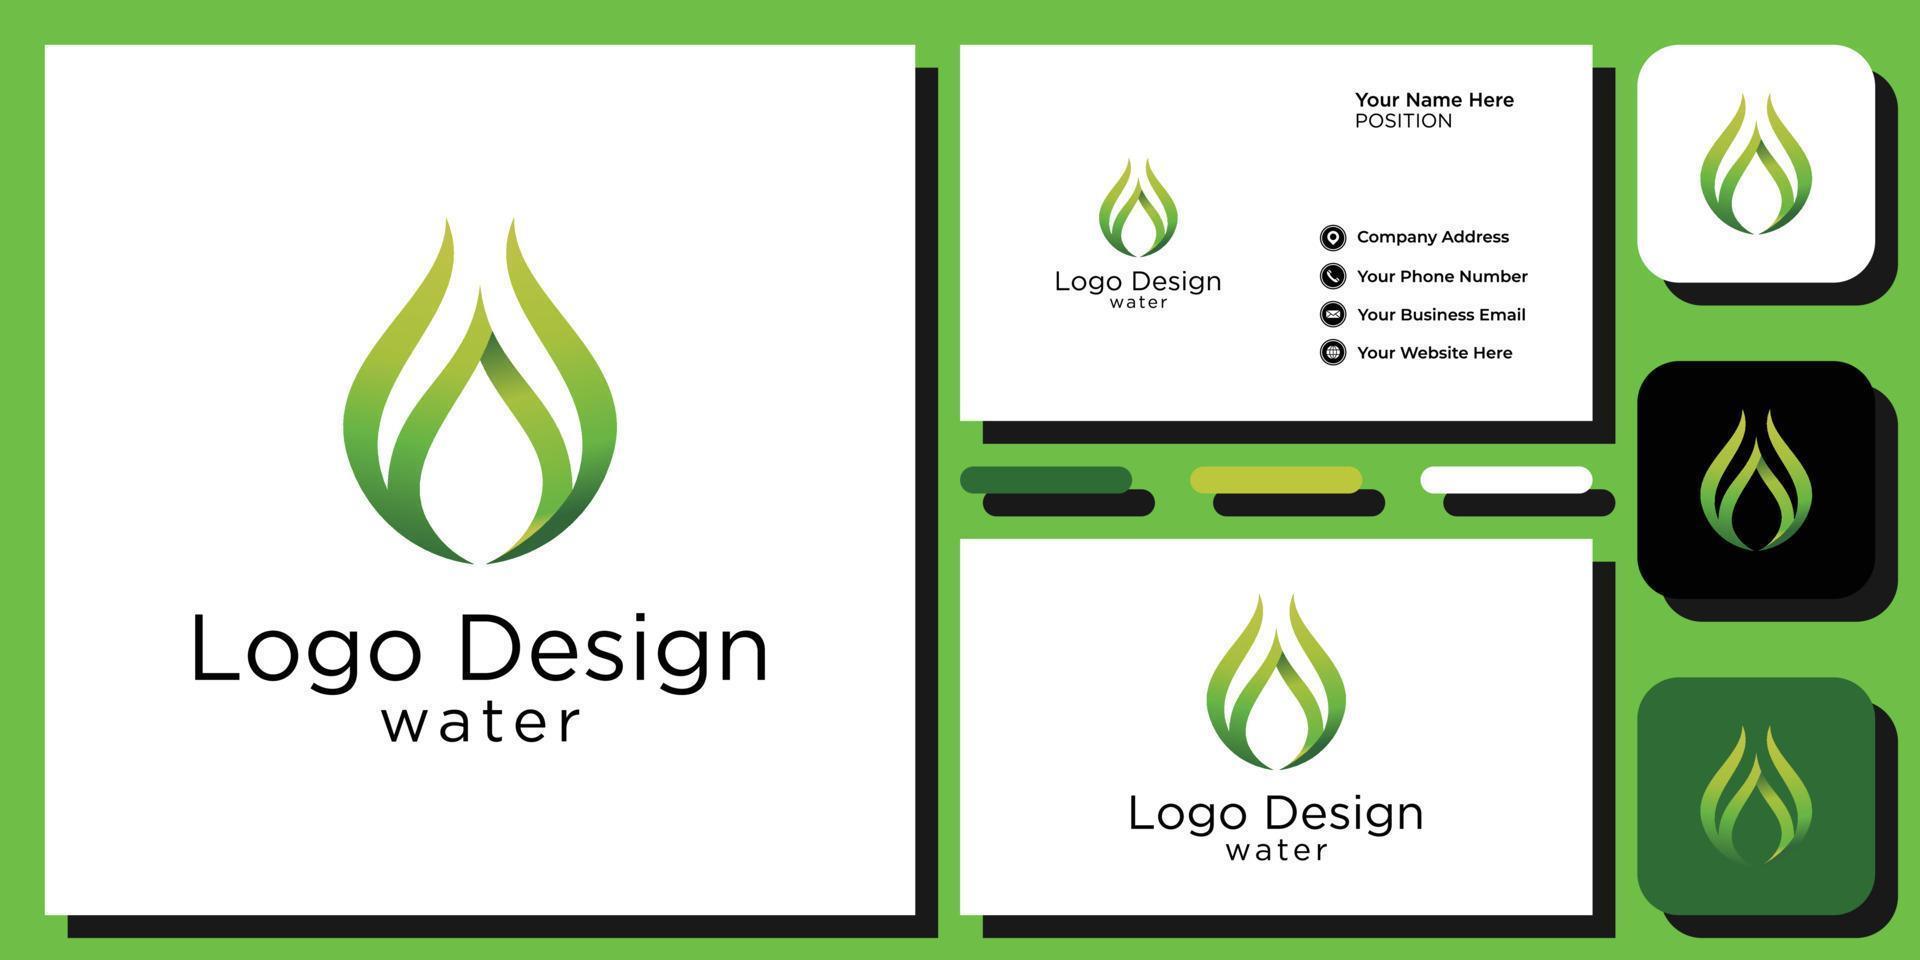 elegante moderno verde naturaleza gotita agua serif fuente letra inicial alfabeto con plantilla de tarjeta de visita vector